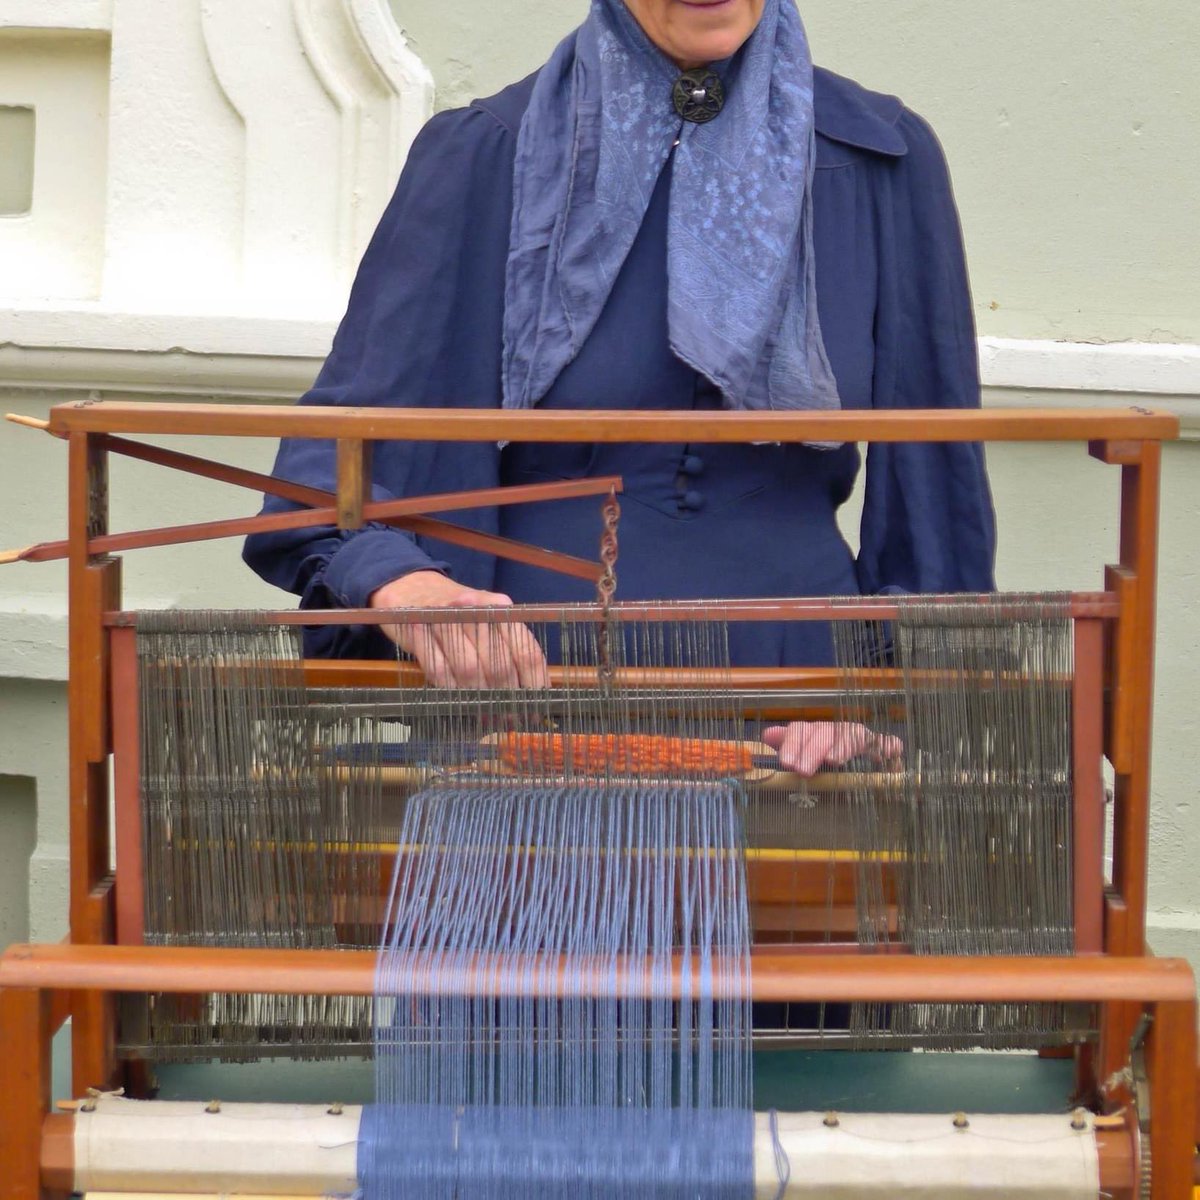 Linen and weaving have long been a part of Bandon's heritage. See it in action Sunday 21st August 12-5

#heritage #familyfun #heritageskills #lovebandon #bandon 

@HeritageHubIRE @irishwalledtown @Corkcoco @HeritageWeek @pure_cork